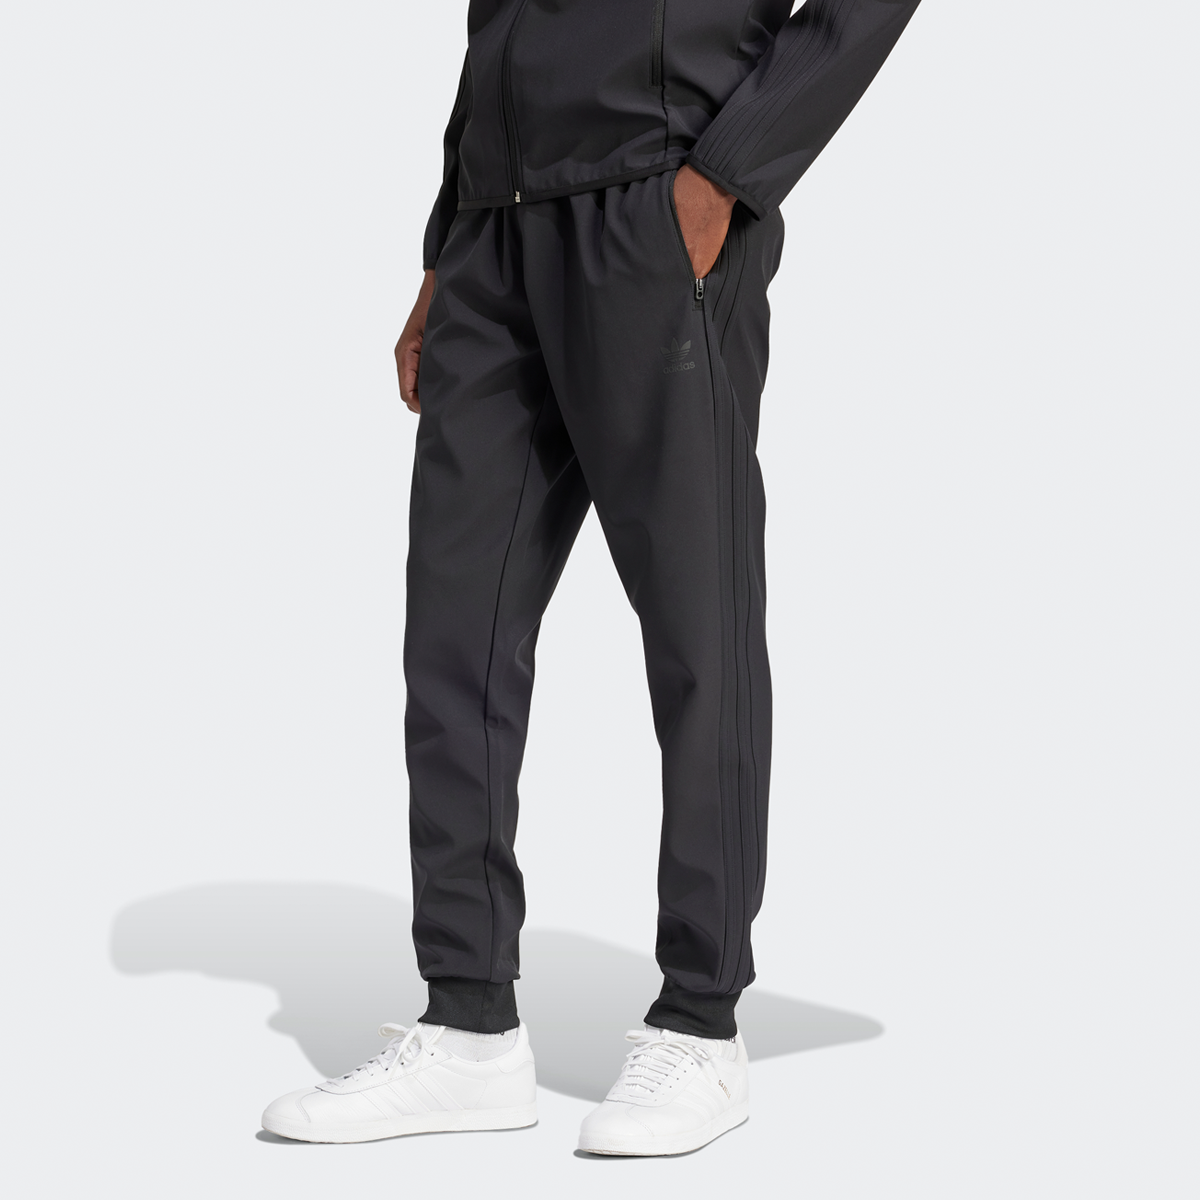 Pantalon de Survêtement  adicolor Superstar, adidas Originals, Apparel, black, taille: S